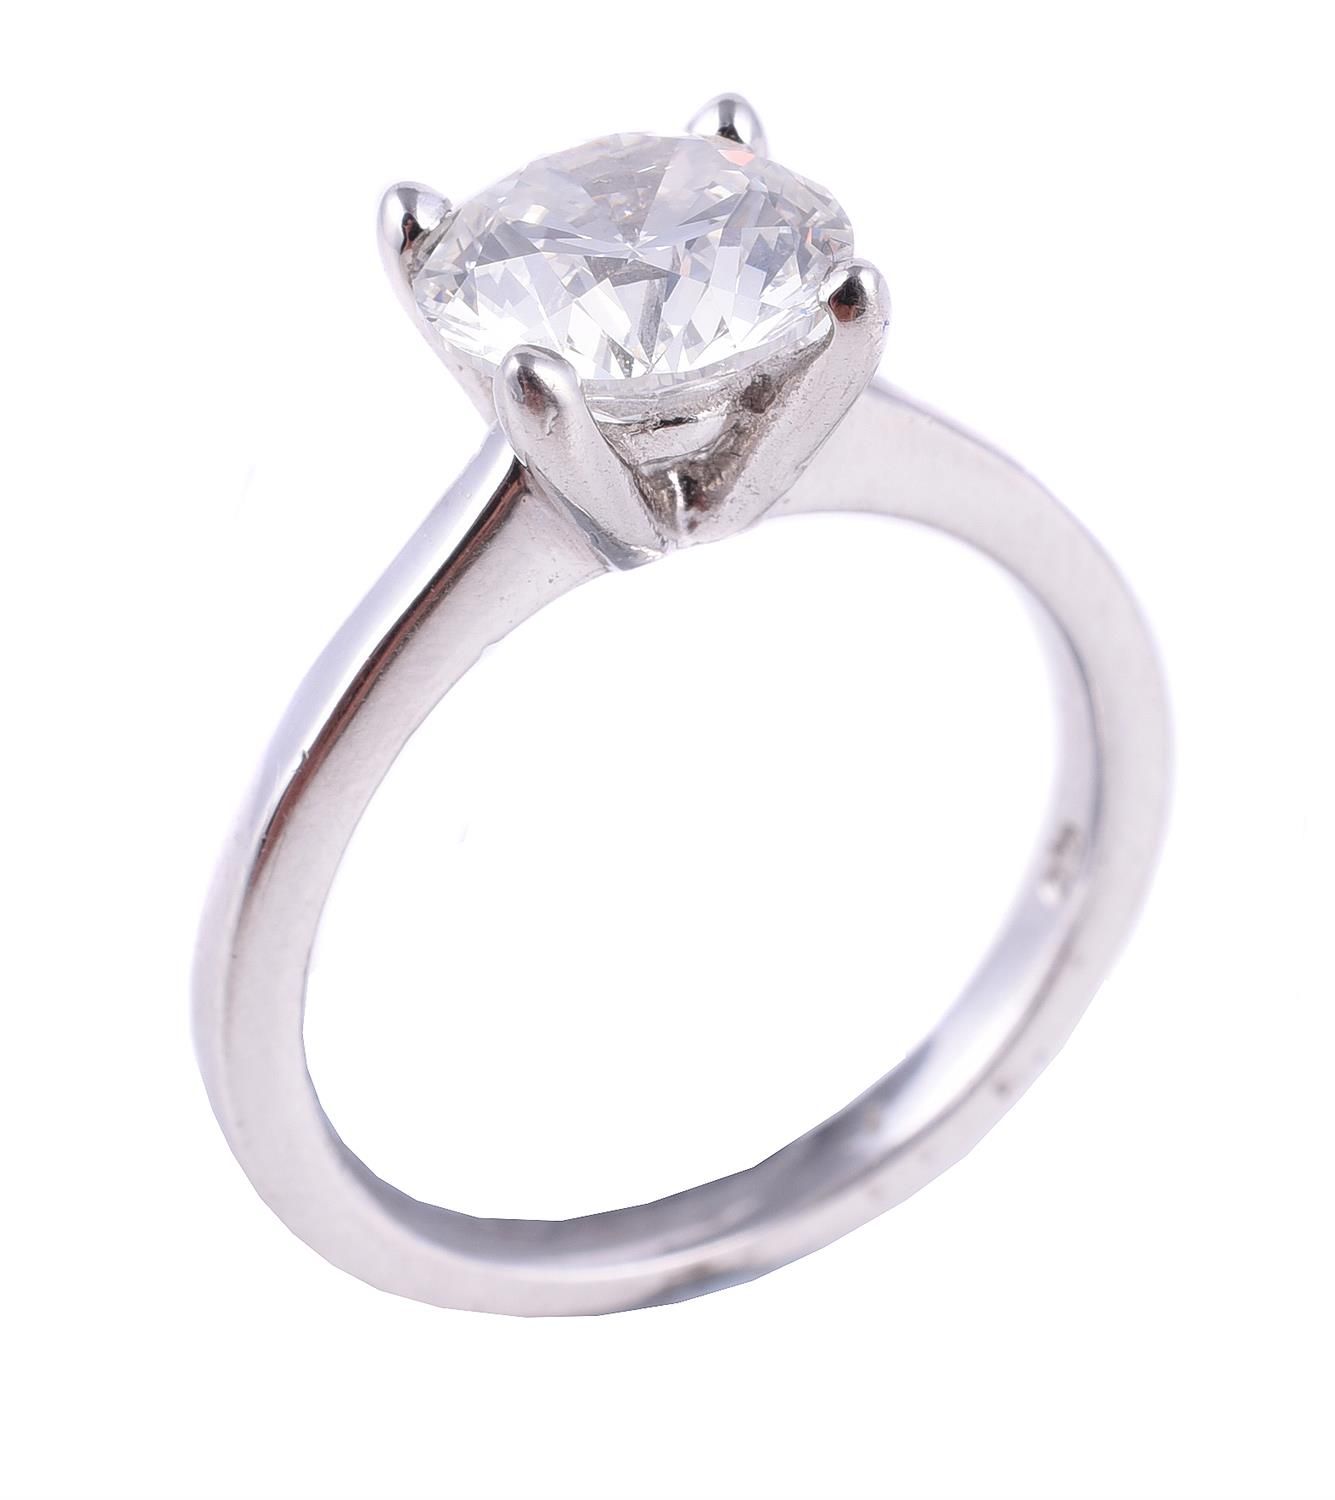 A single stone diamond ring 一枚单石钻石戒指，明亮式切割钻石估计重1.81克拉，手指尺寸为L 1/2，总重5.1克